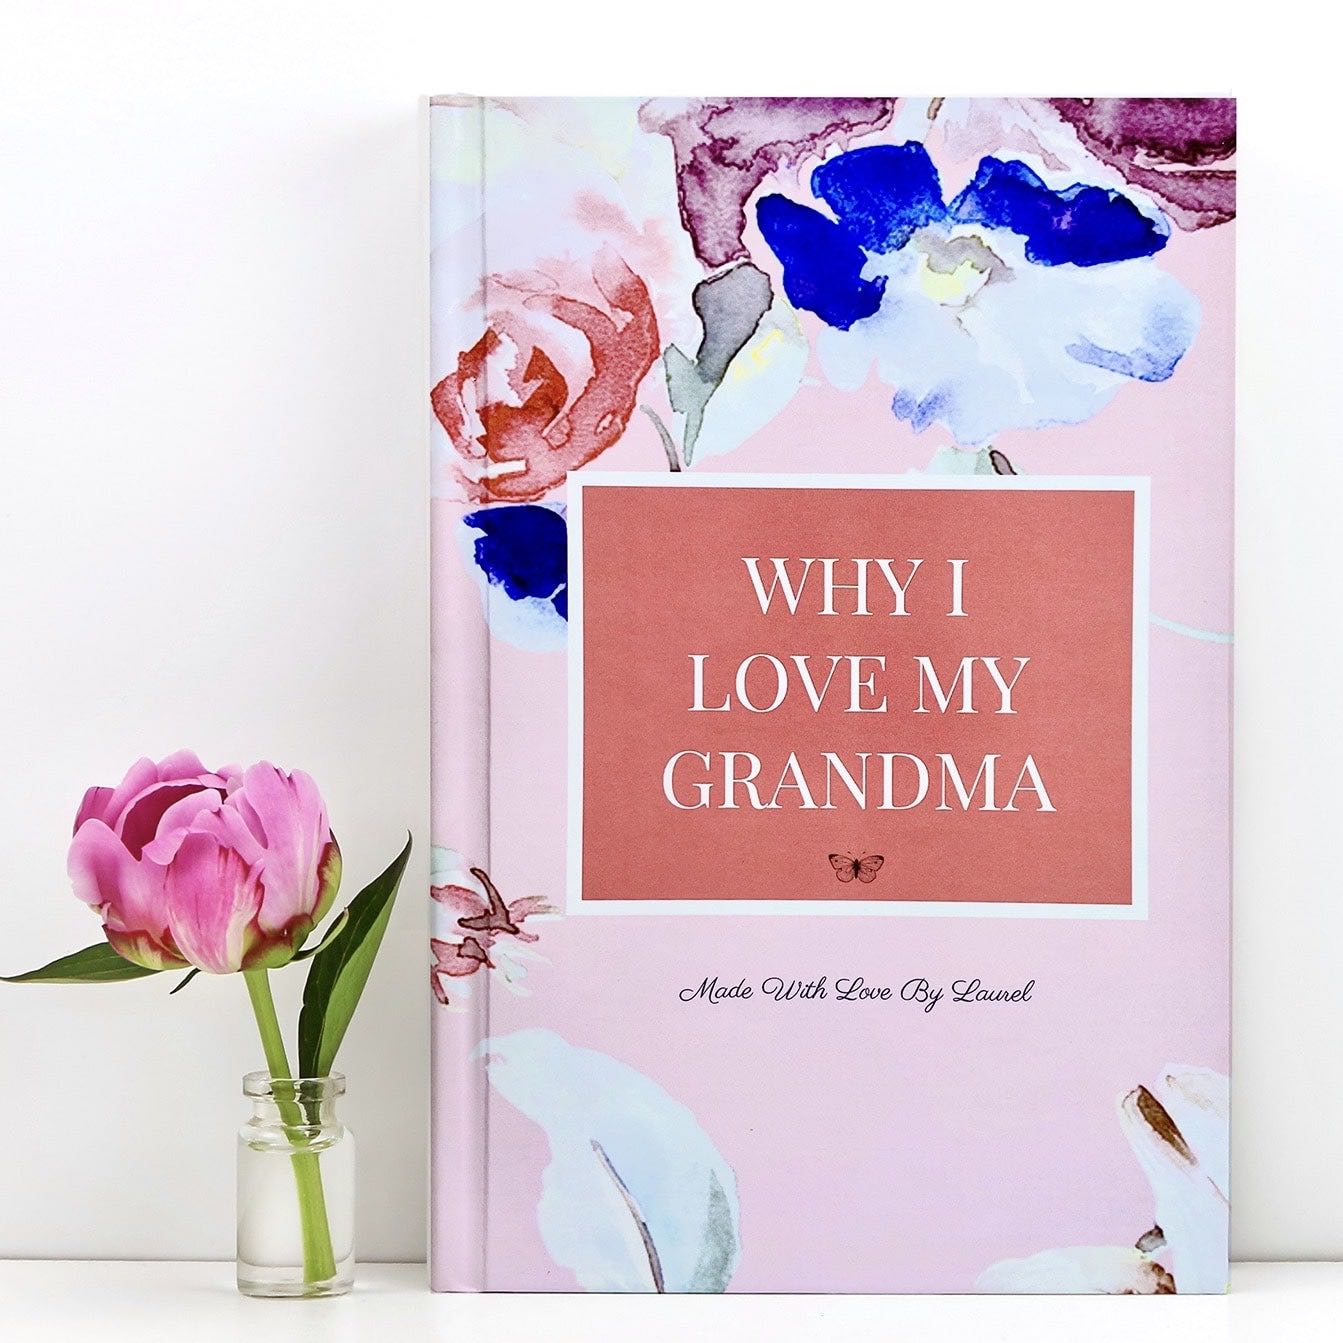 Why I Love My Grandma Personalized Book. Luhvee Books